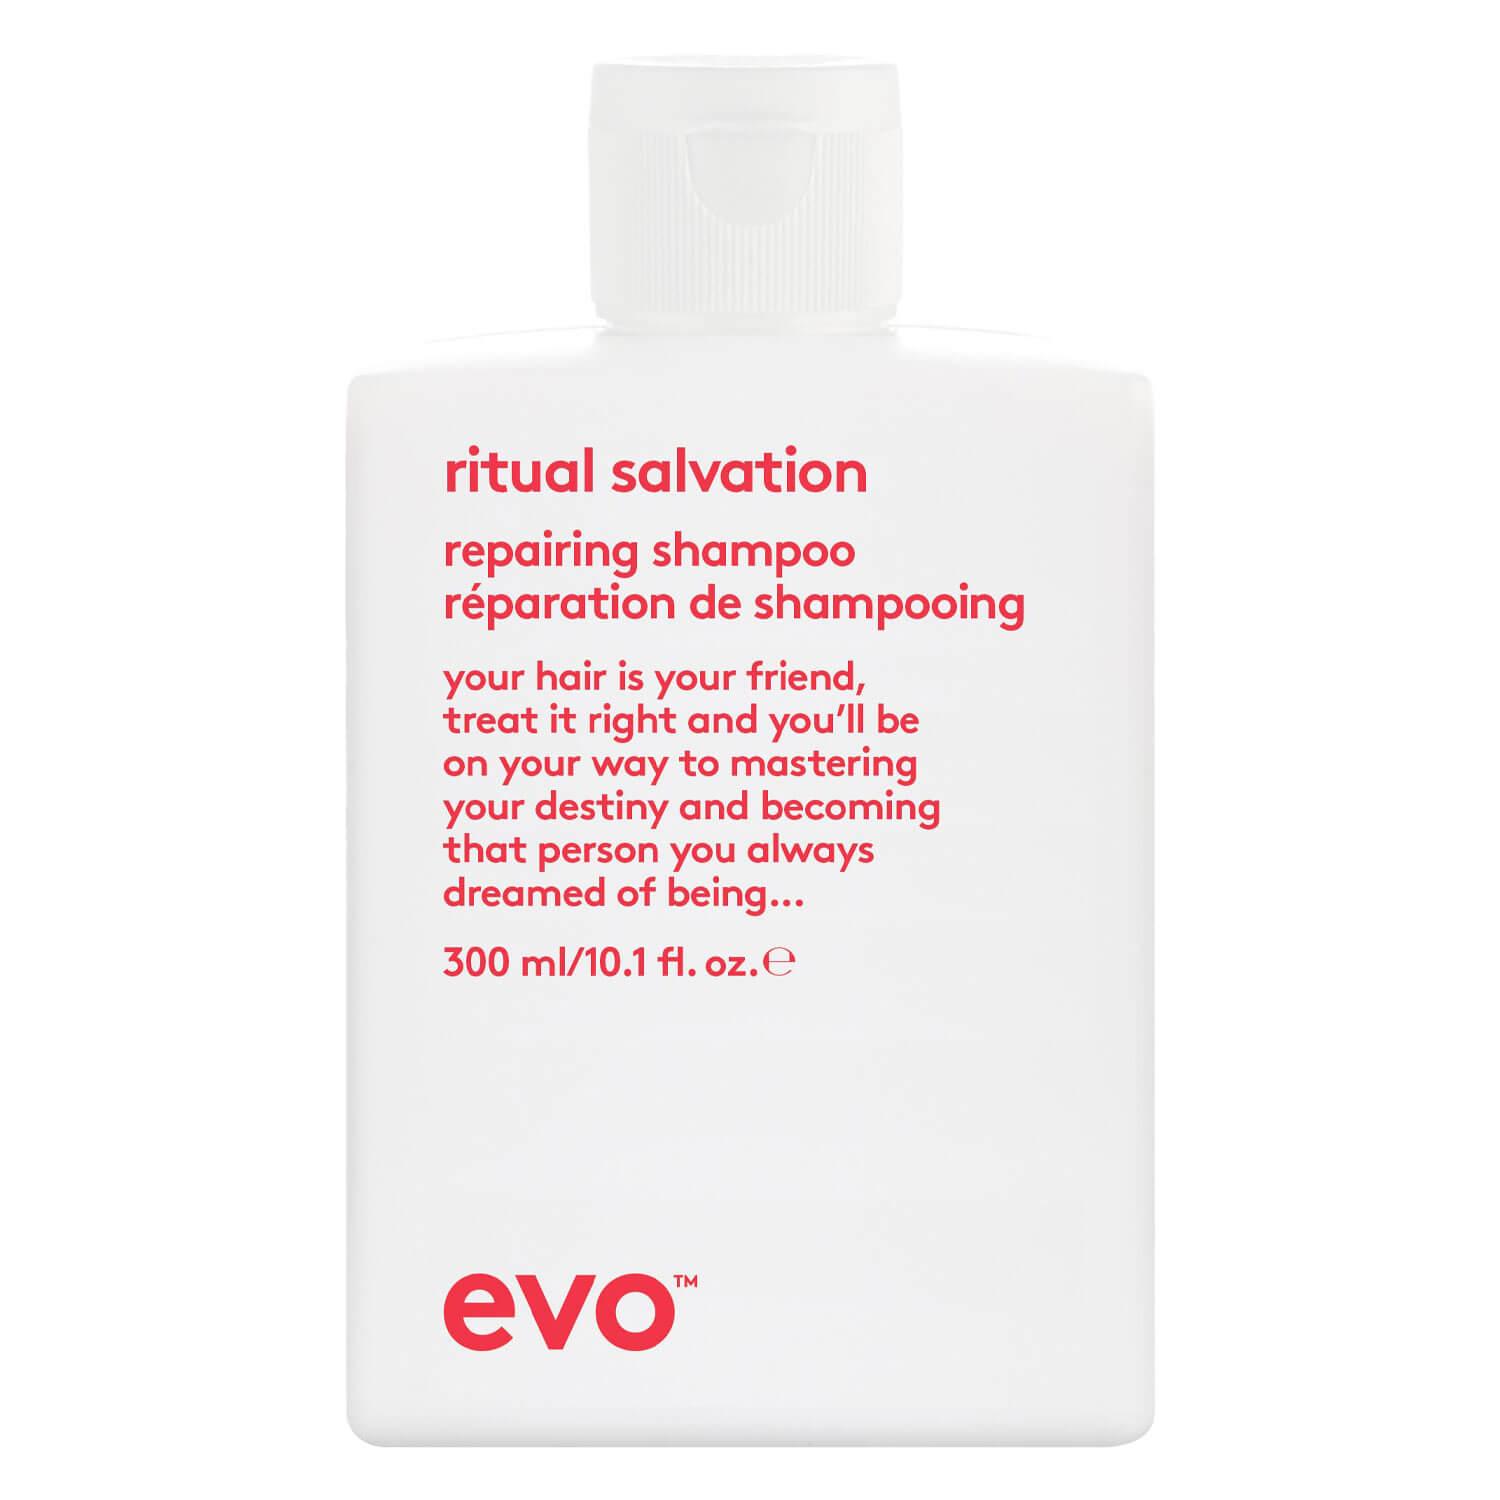 evo care - ritual salvation repairing shampoo